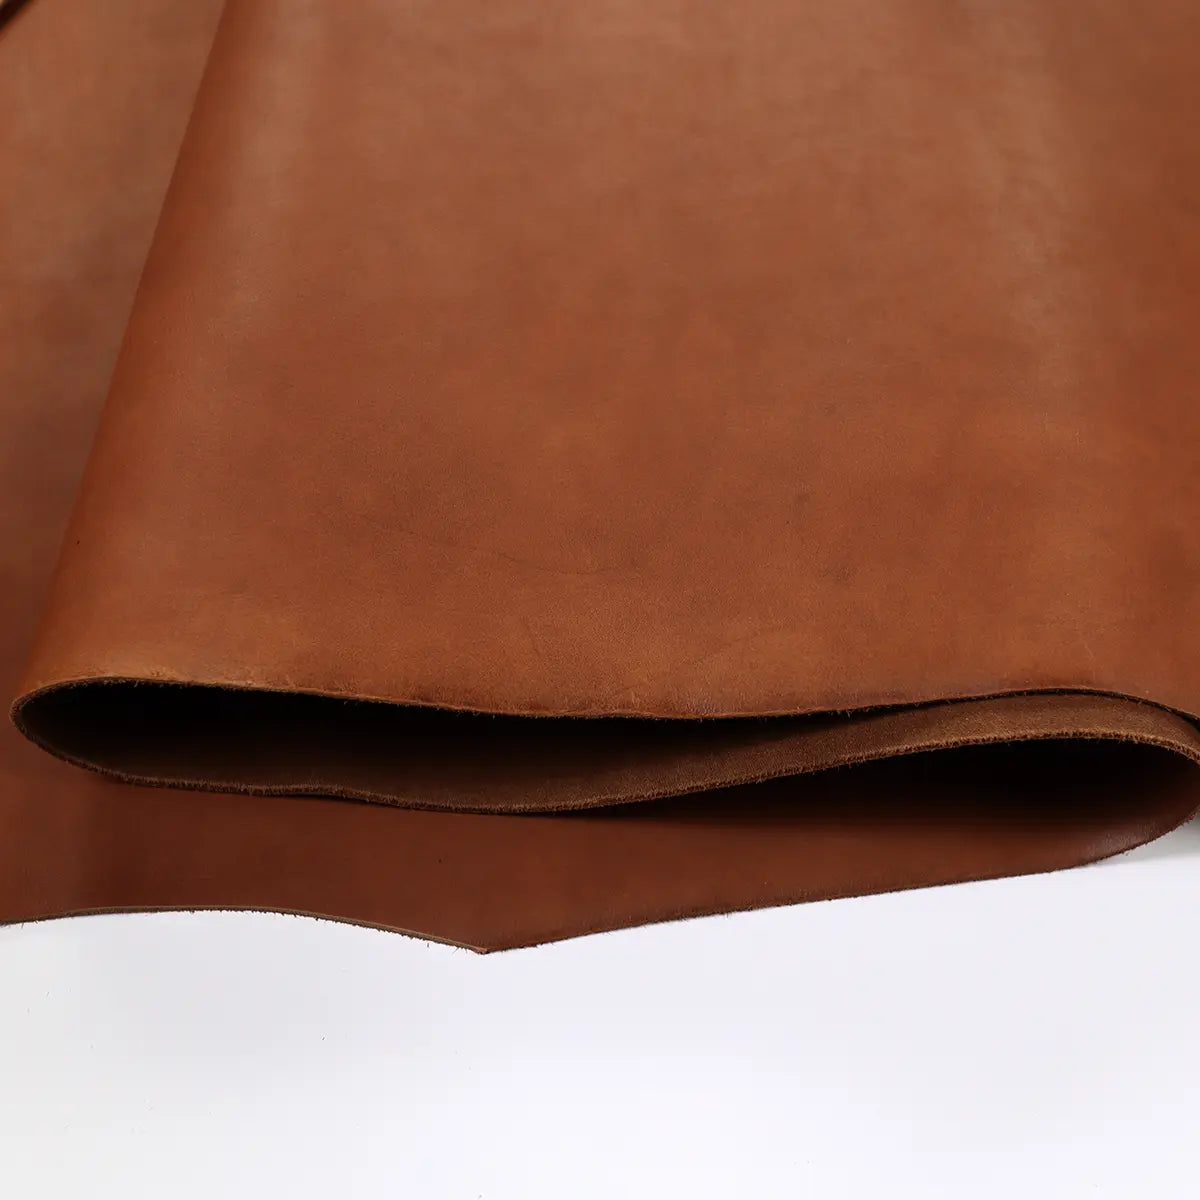 SB Foot Medium Brown Chrome Tanned 5-6oz Leather